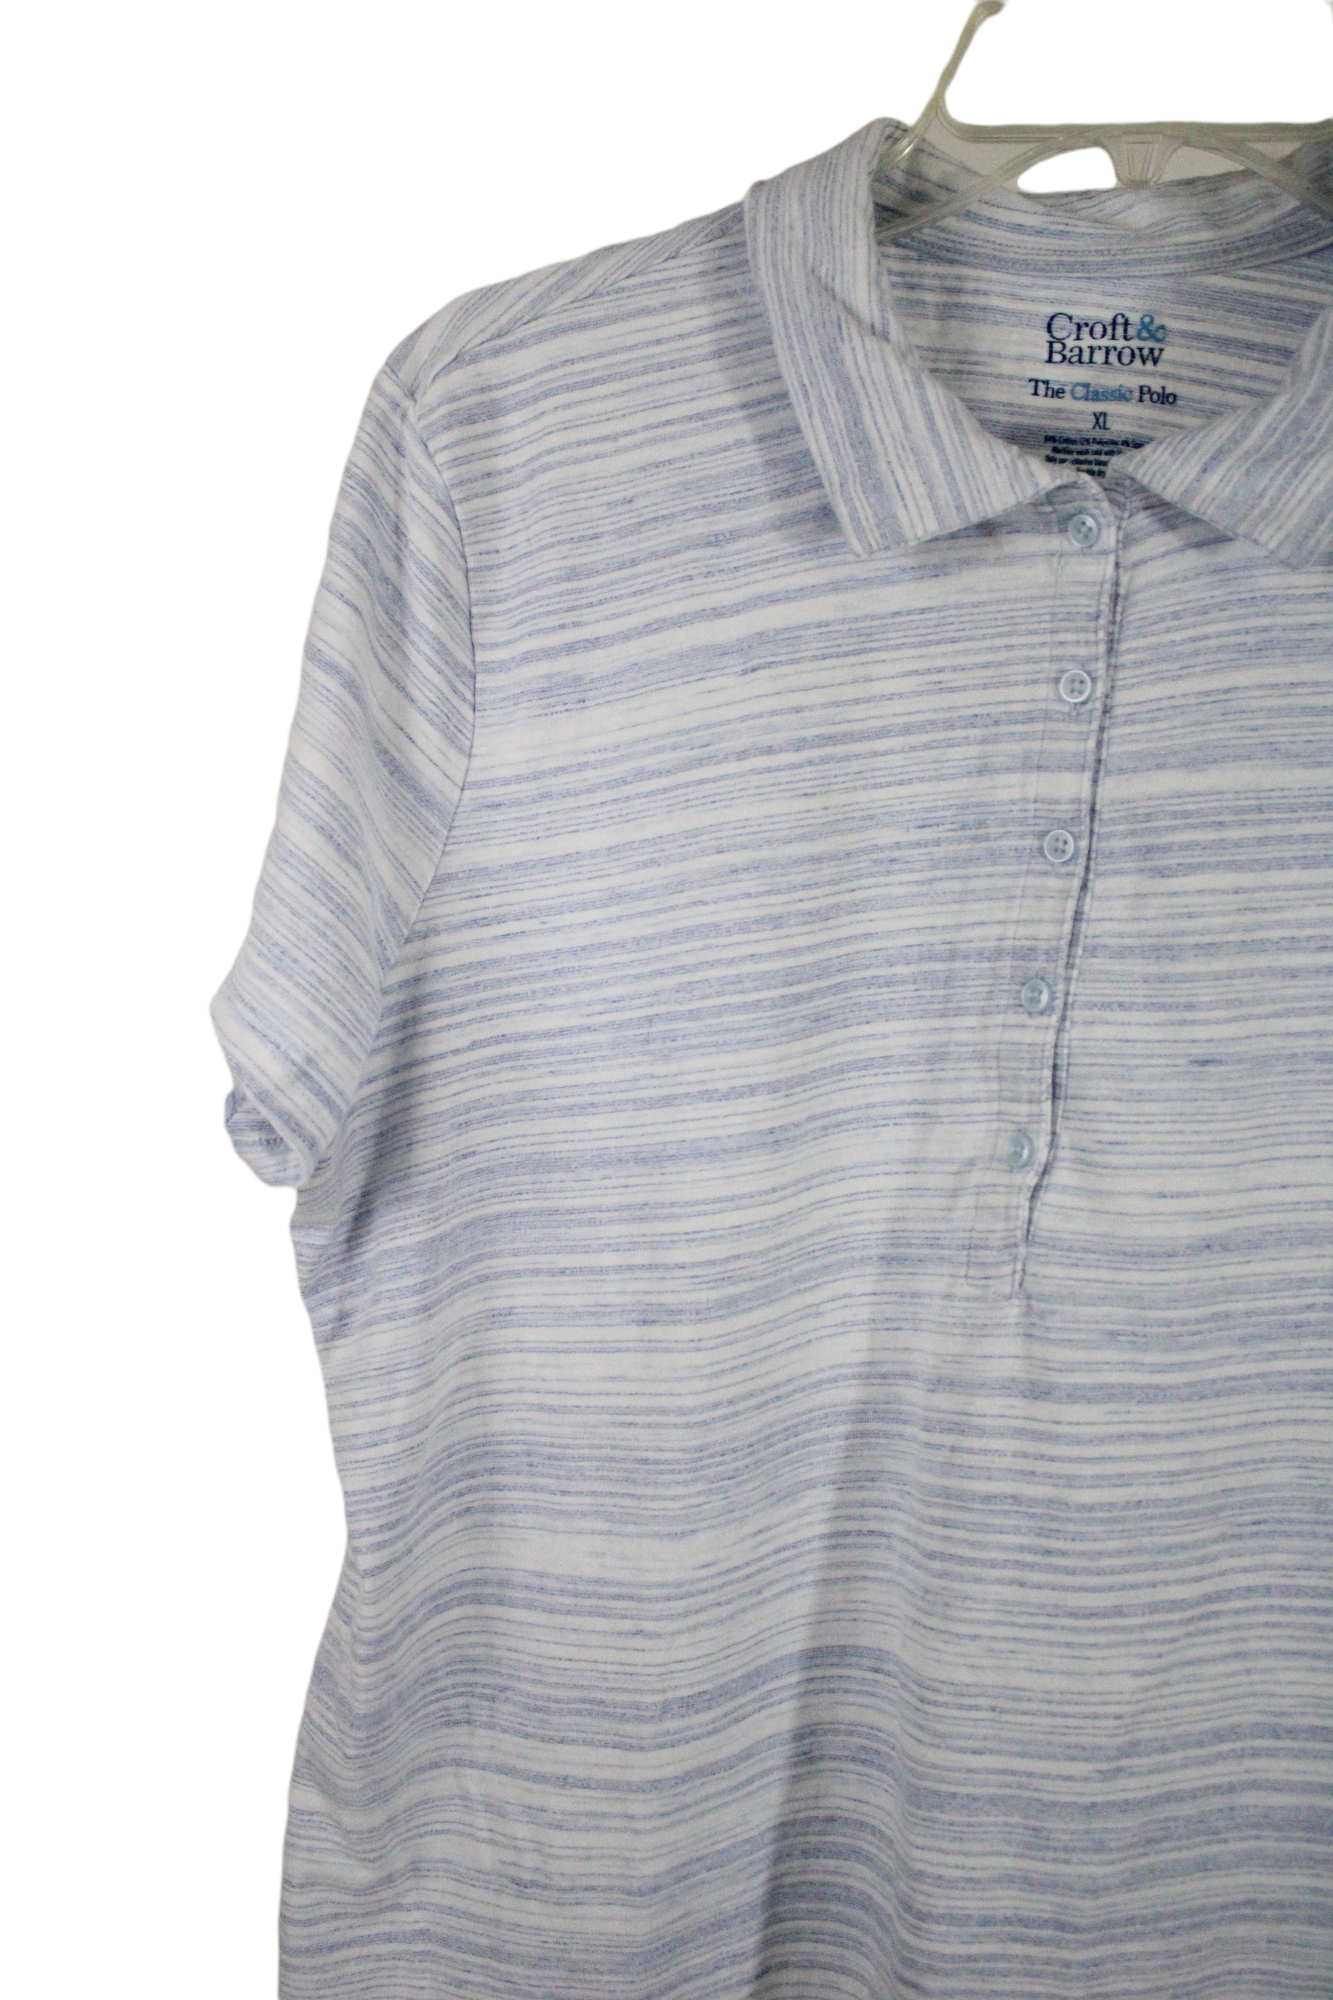 Croft & Barrow The Classic Polo Blue Shirt | XL